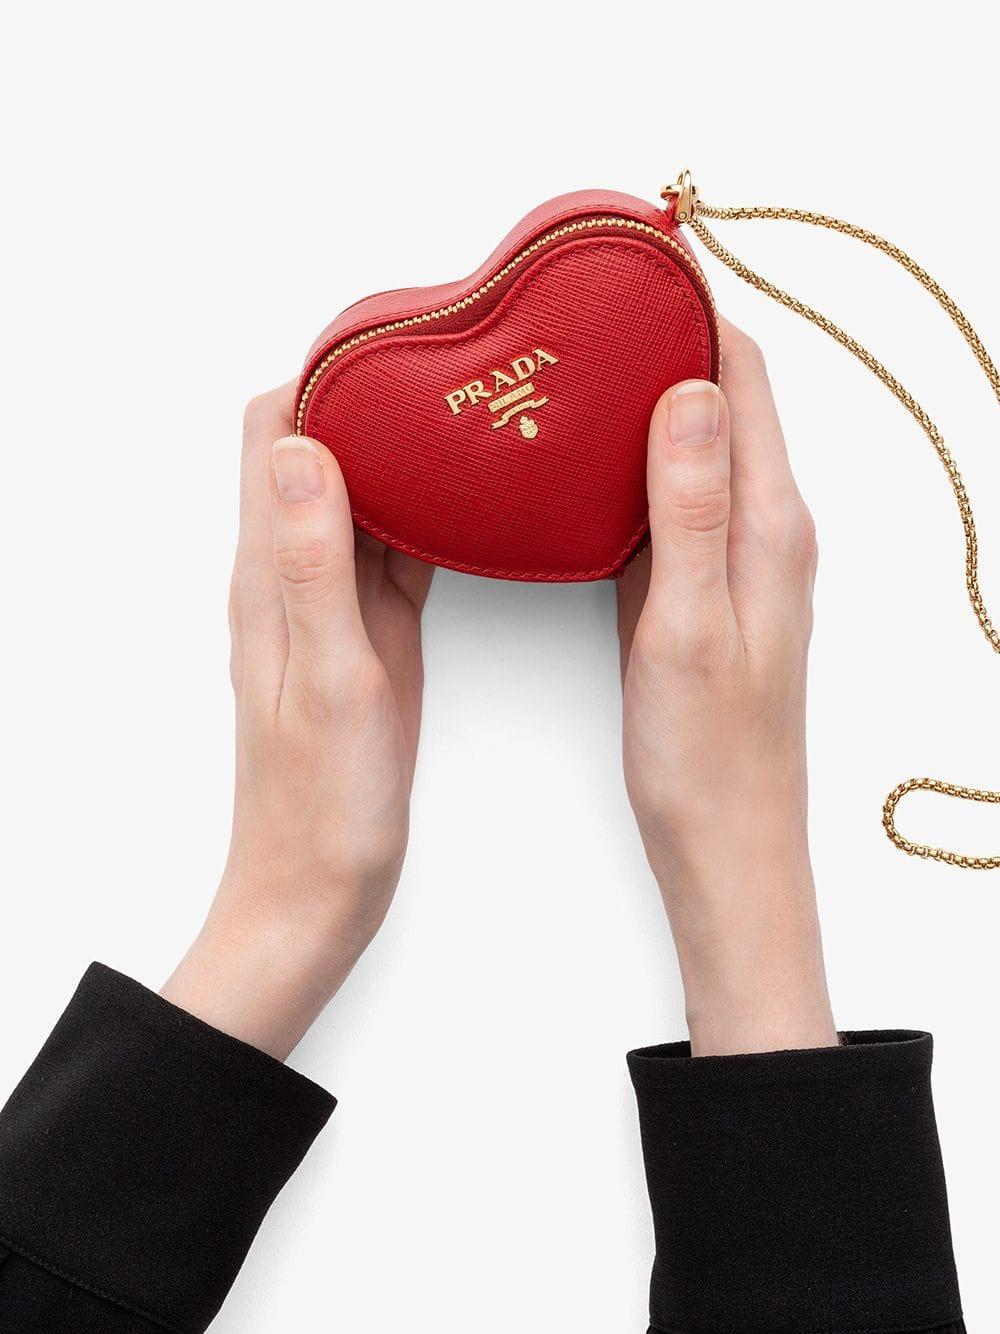 Prada Heart Mini Bag in Red | Lyst